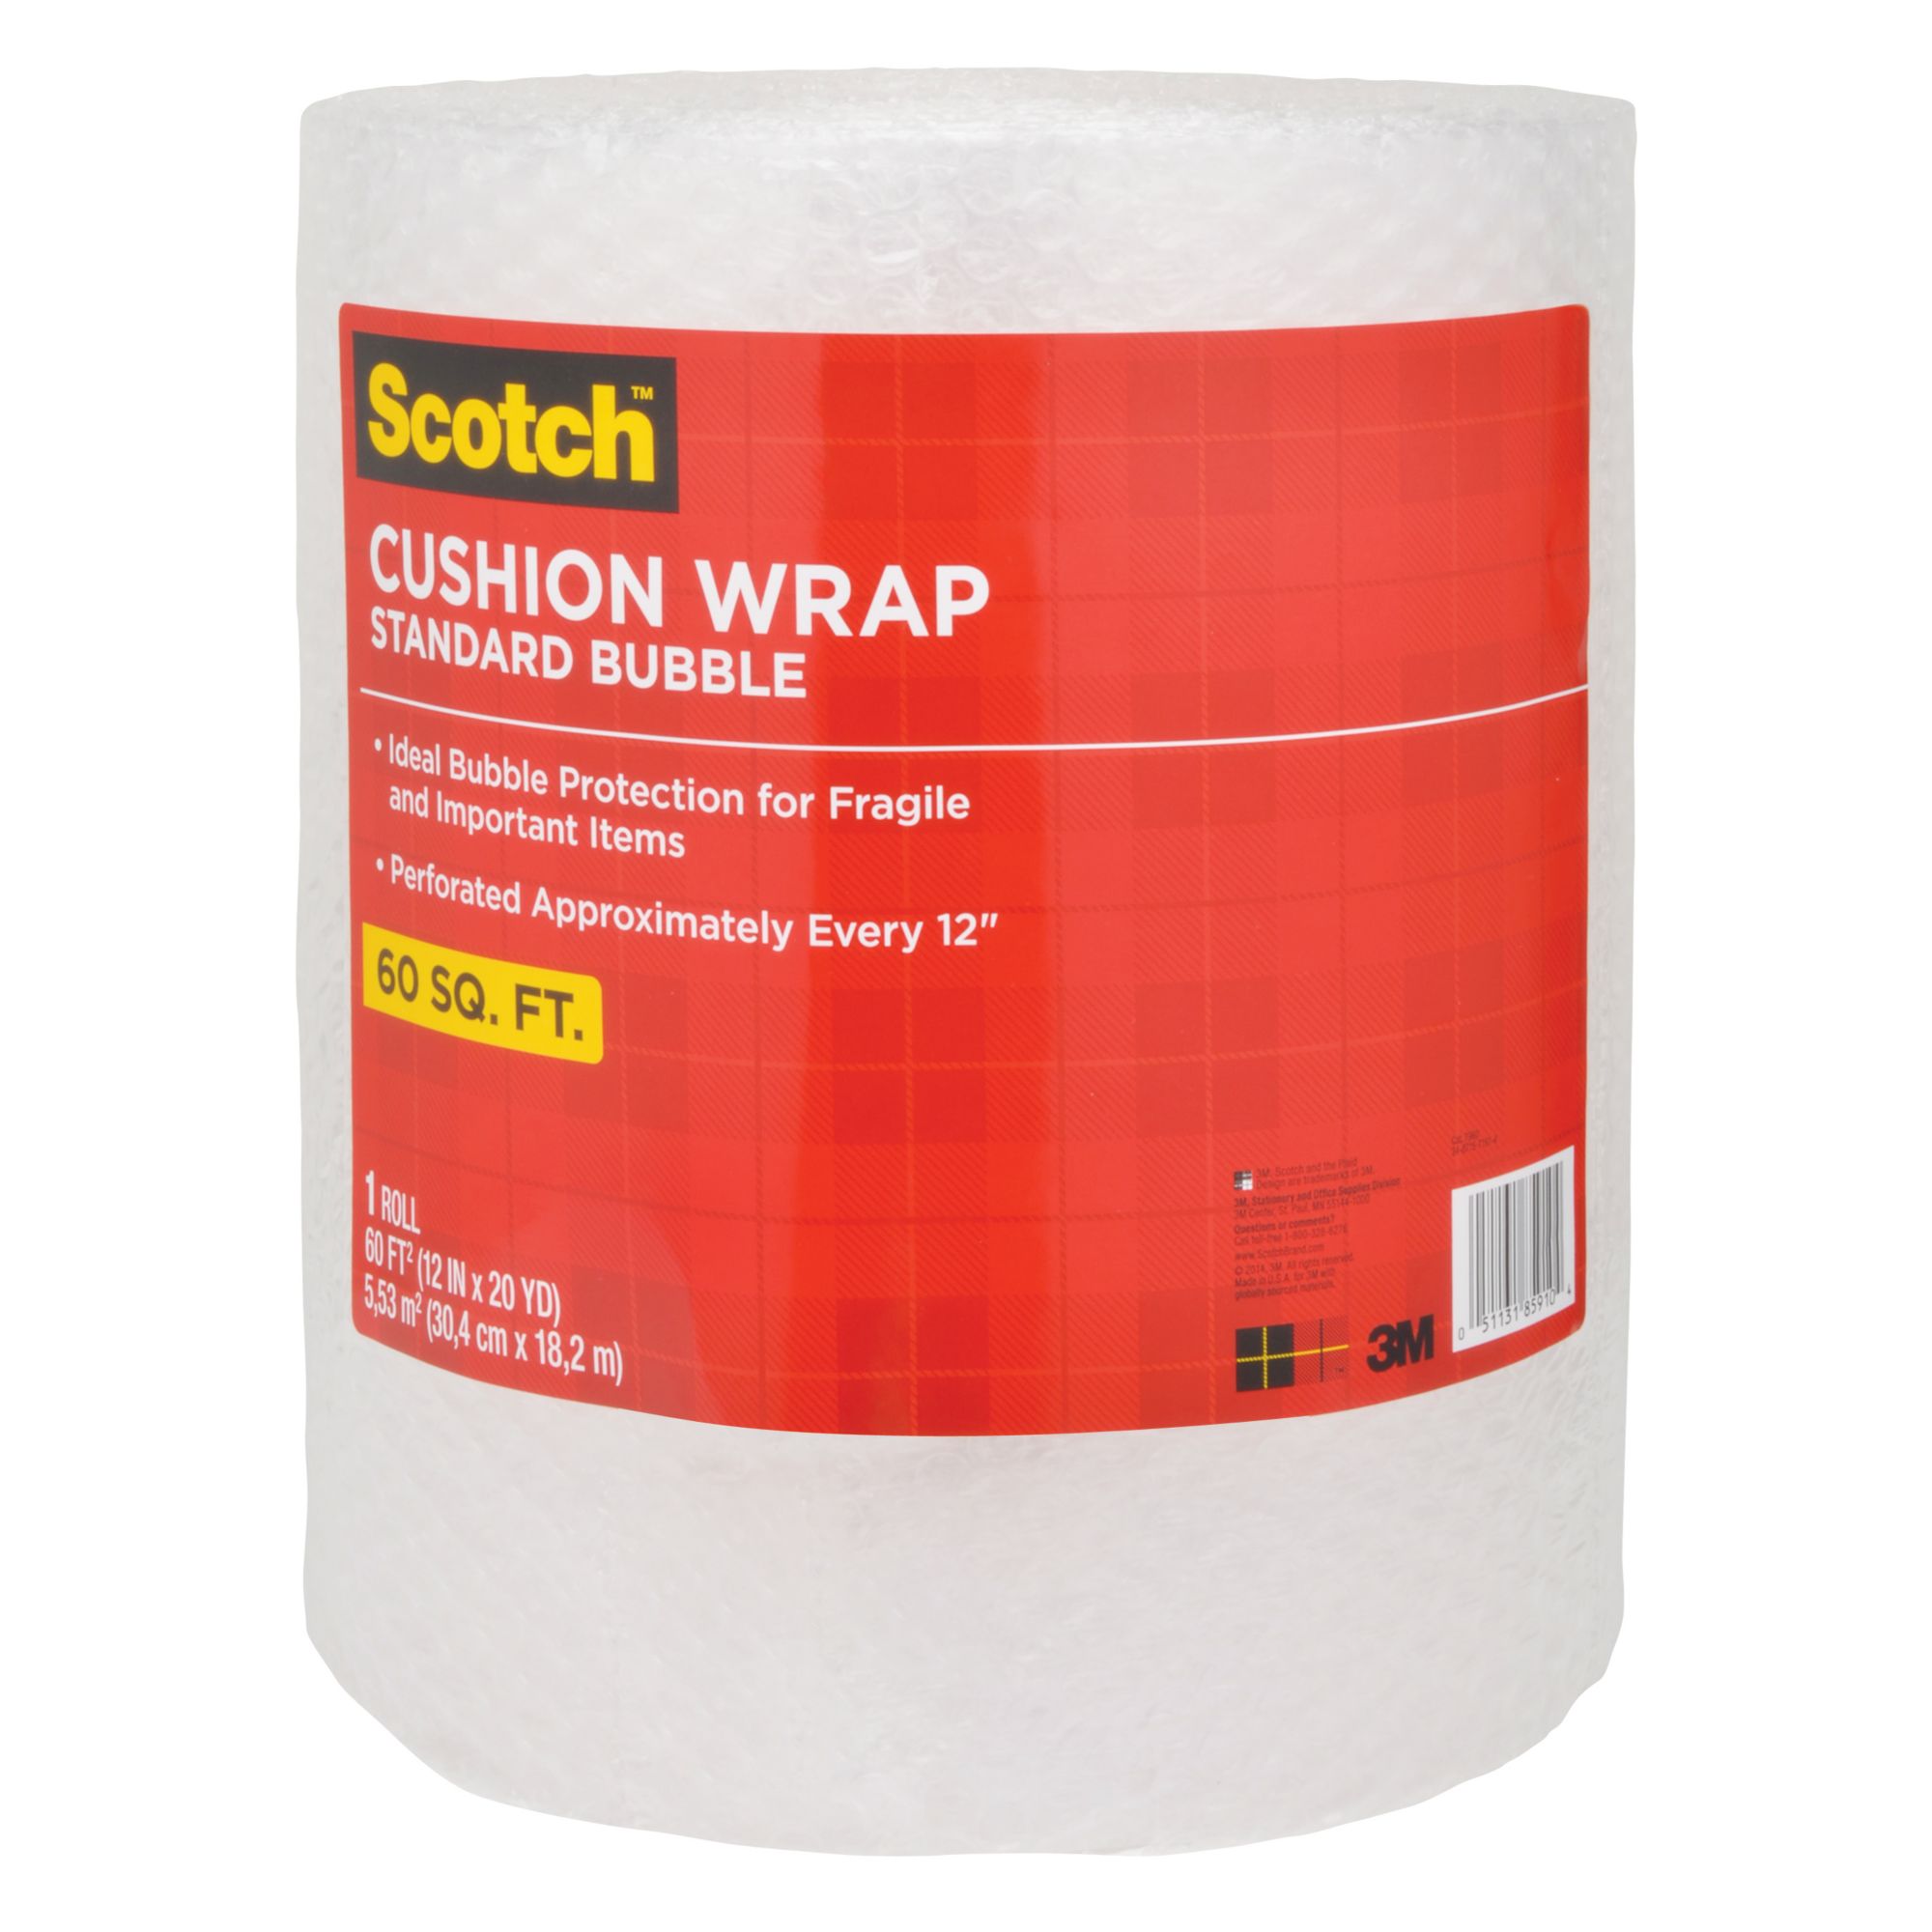 Scotch Standard Bubble Cushion Wrap, 60 sq. ft.